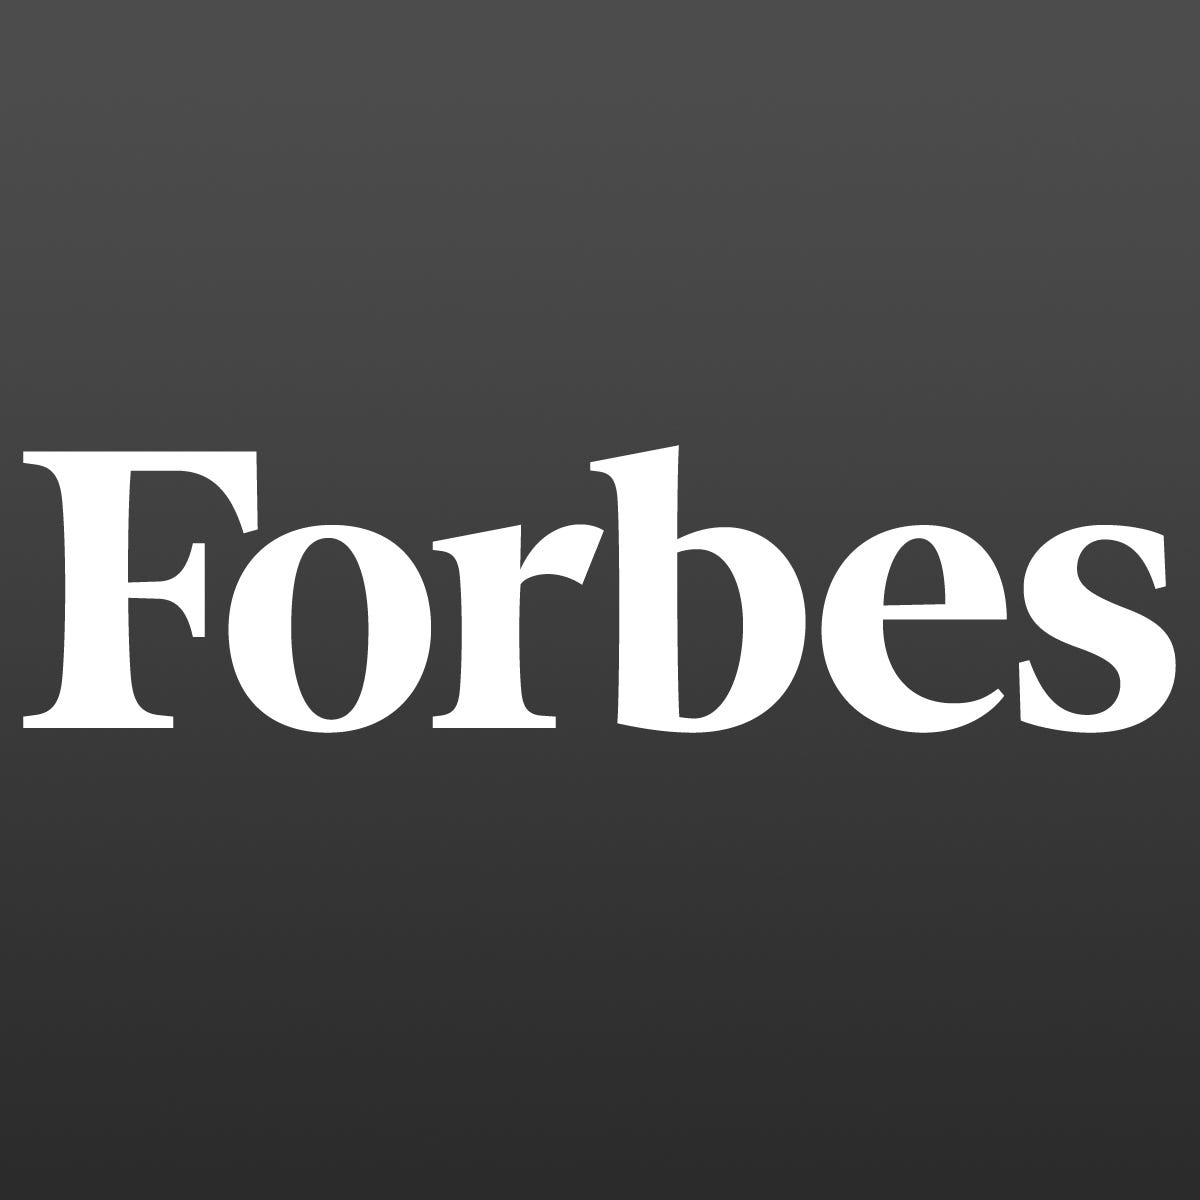 Forbes’a Göre 2023’te Trend Olacak Teknolojiler